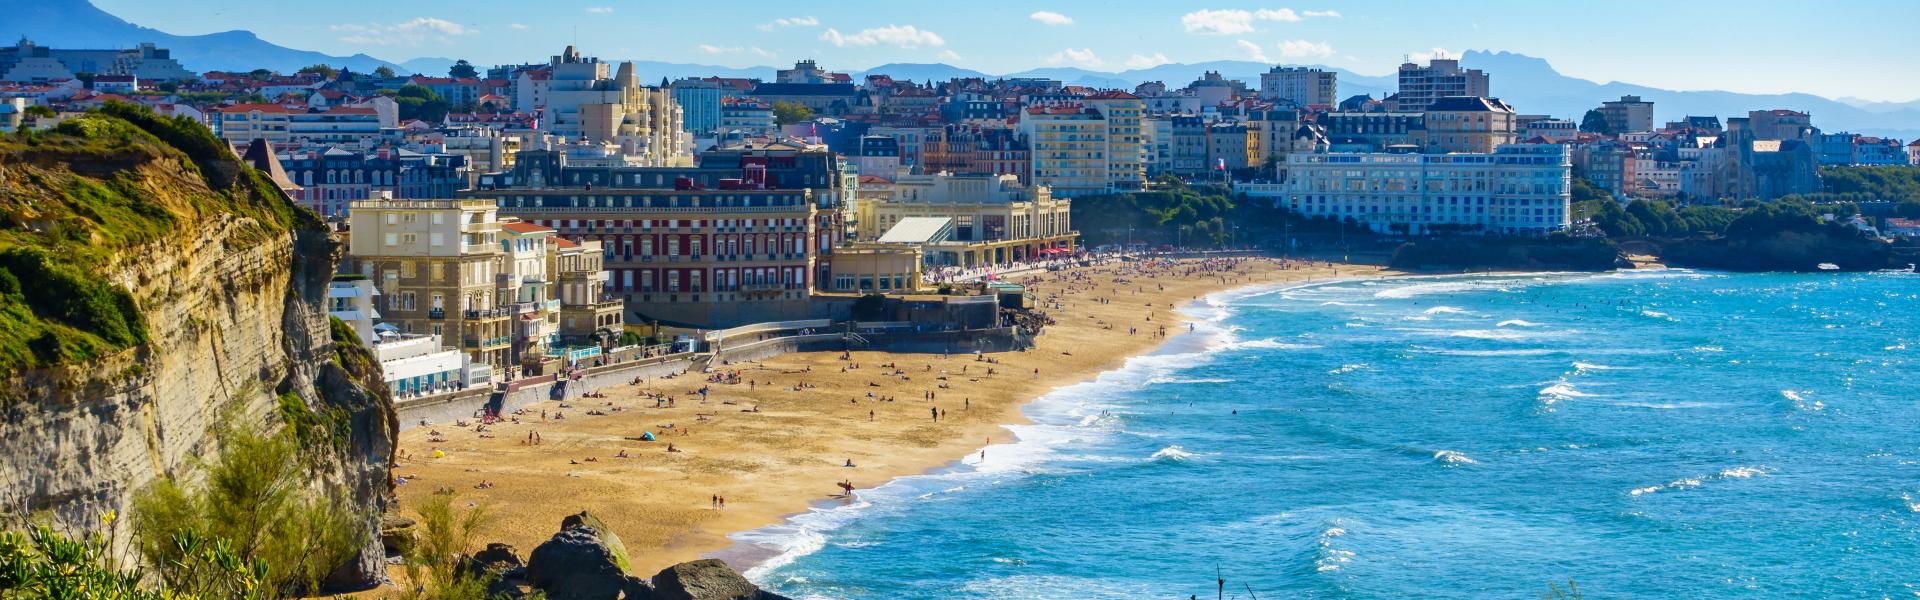 Noclegi i apartamenty wakacyjne w Biarritz - Casamundo